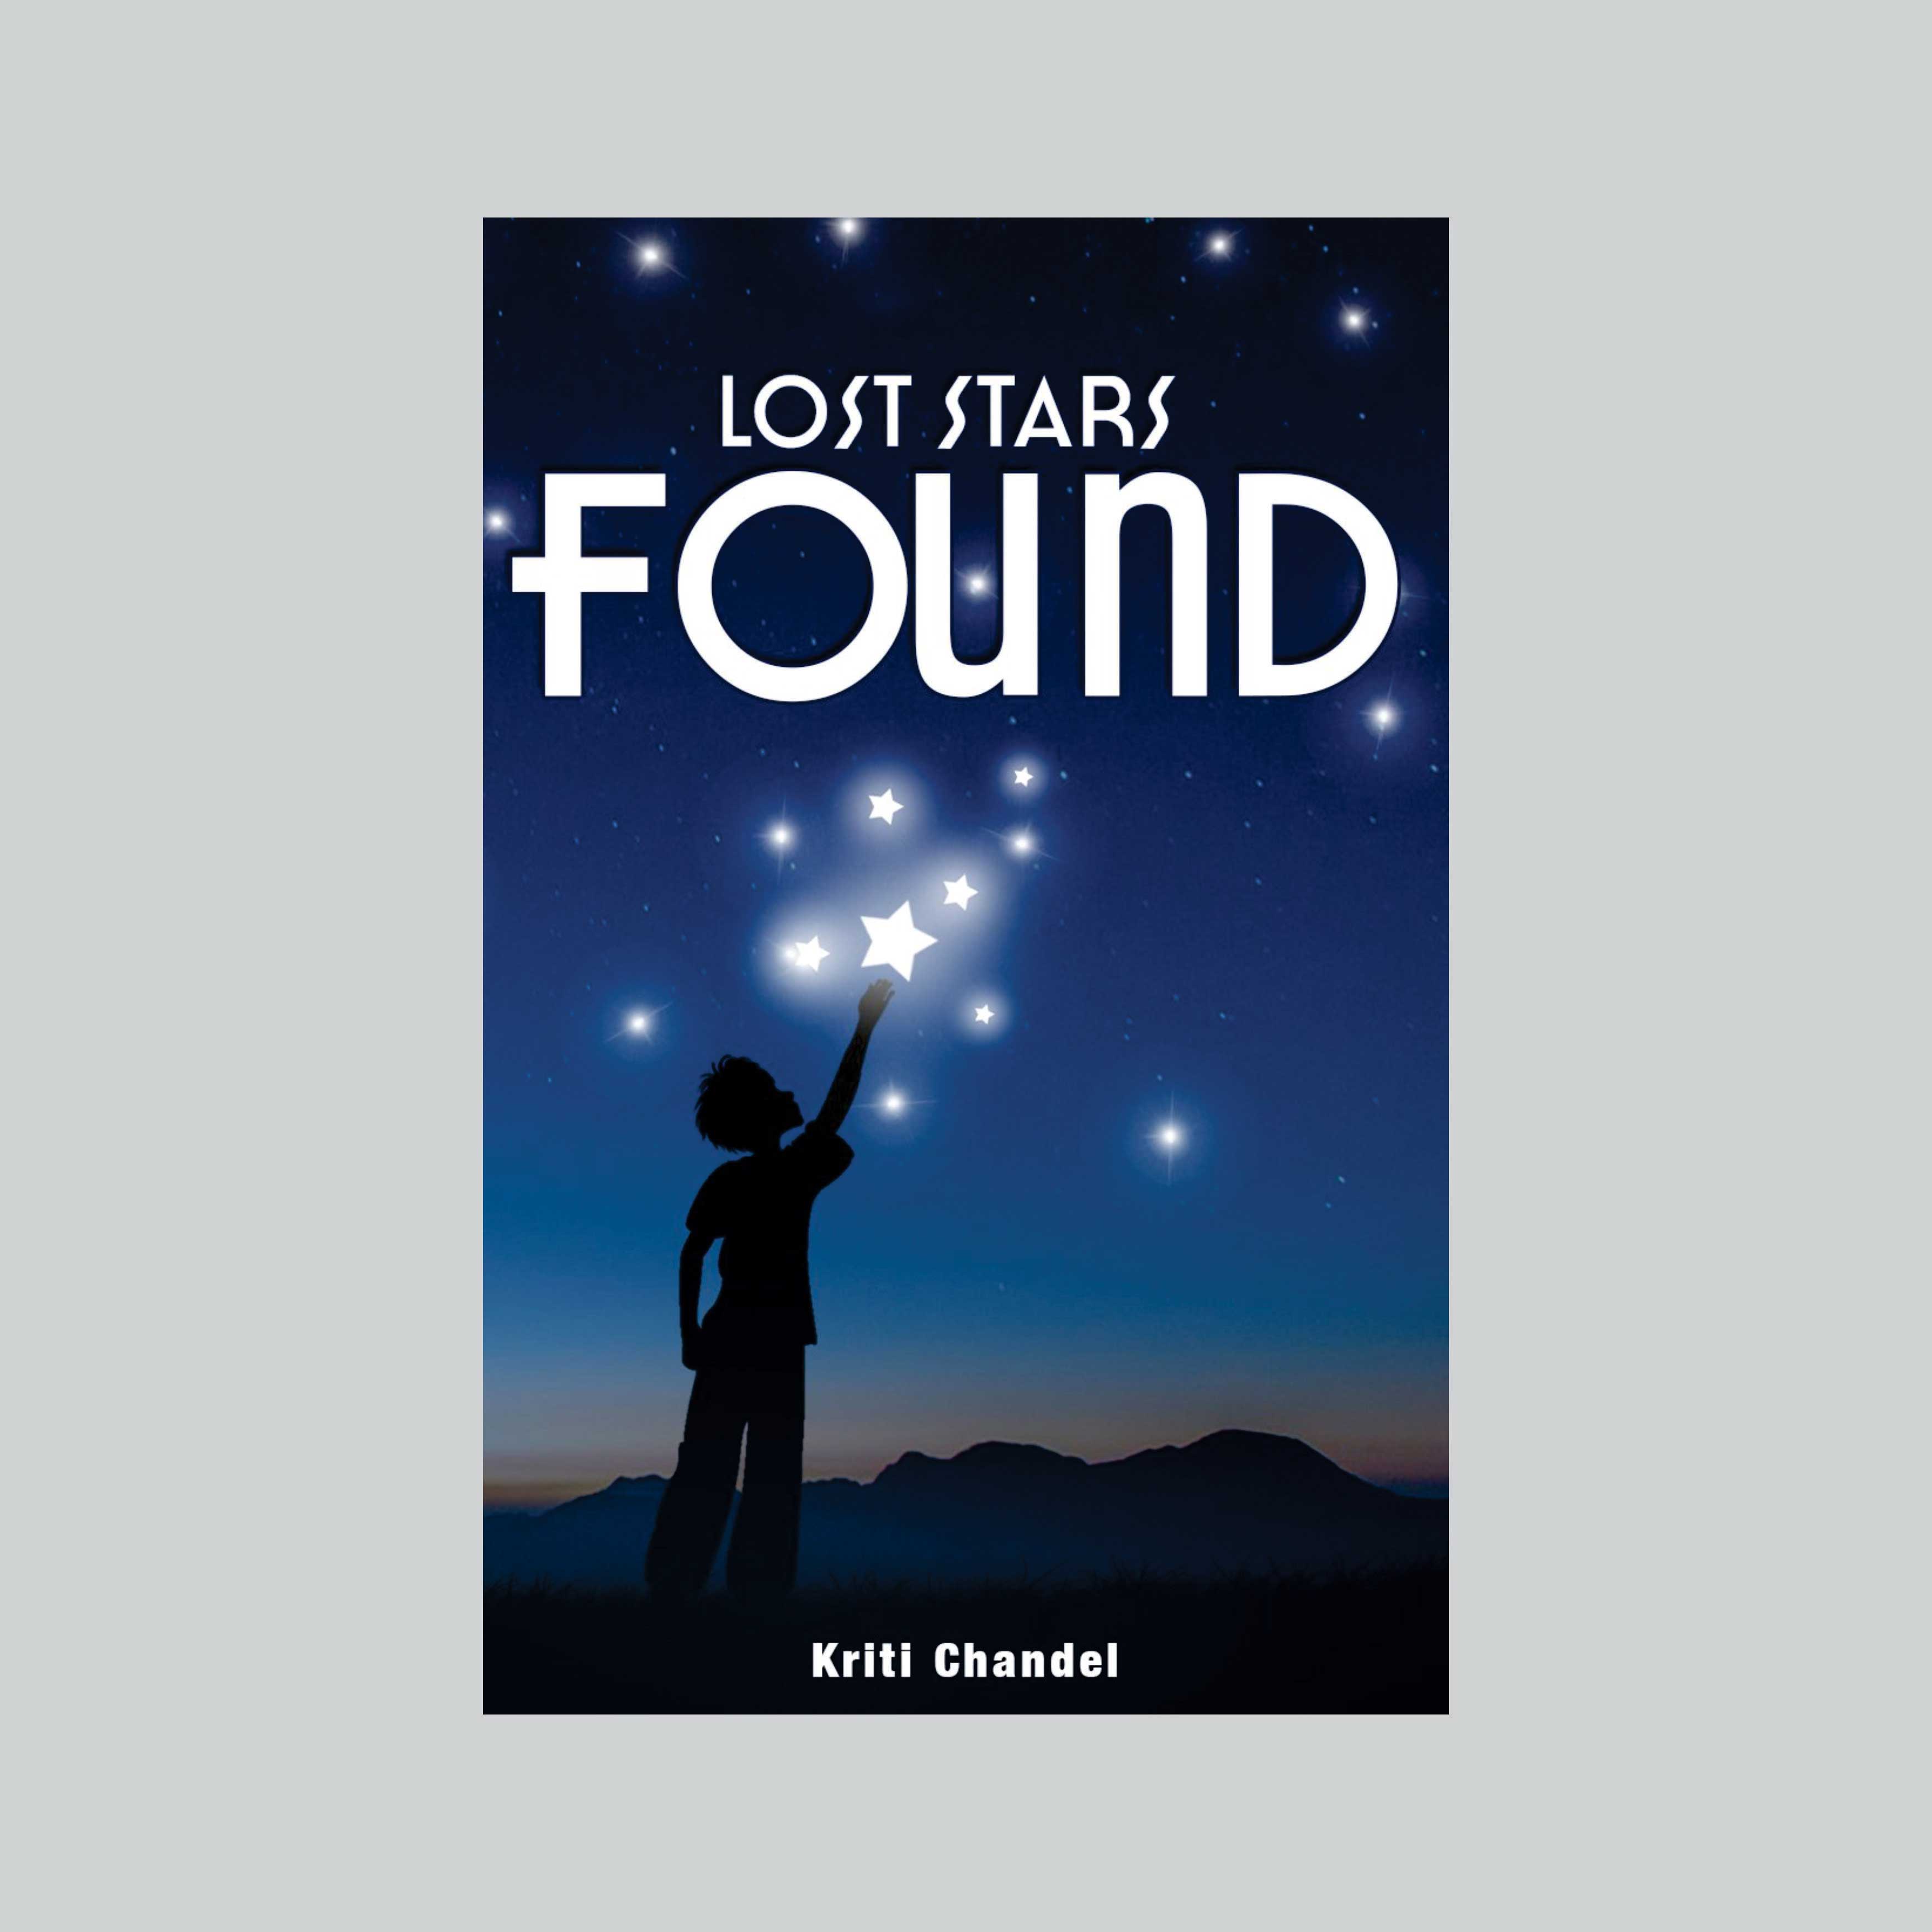 The Lost Stars Found